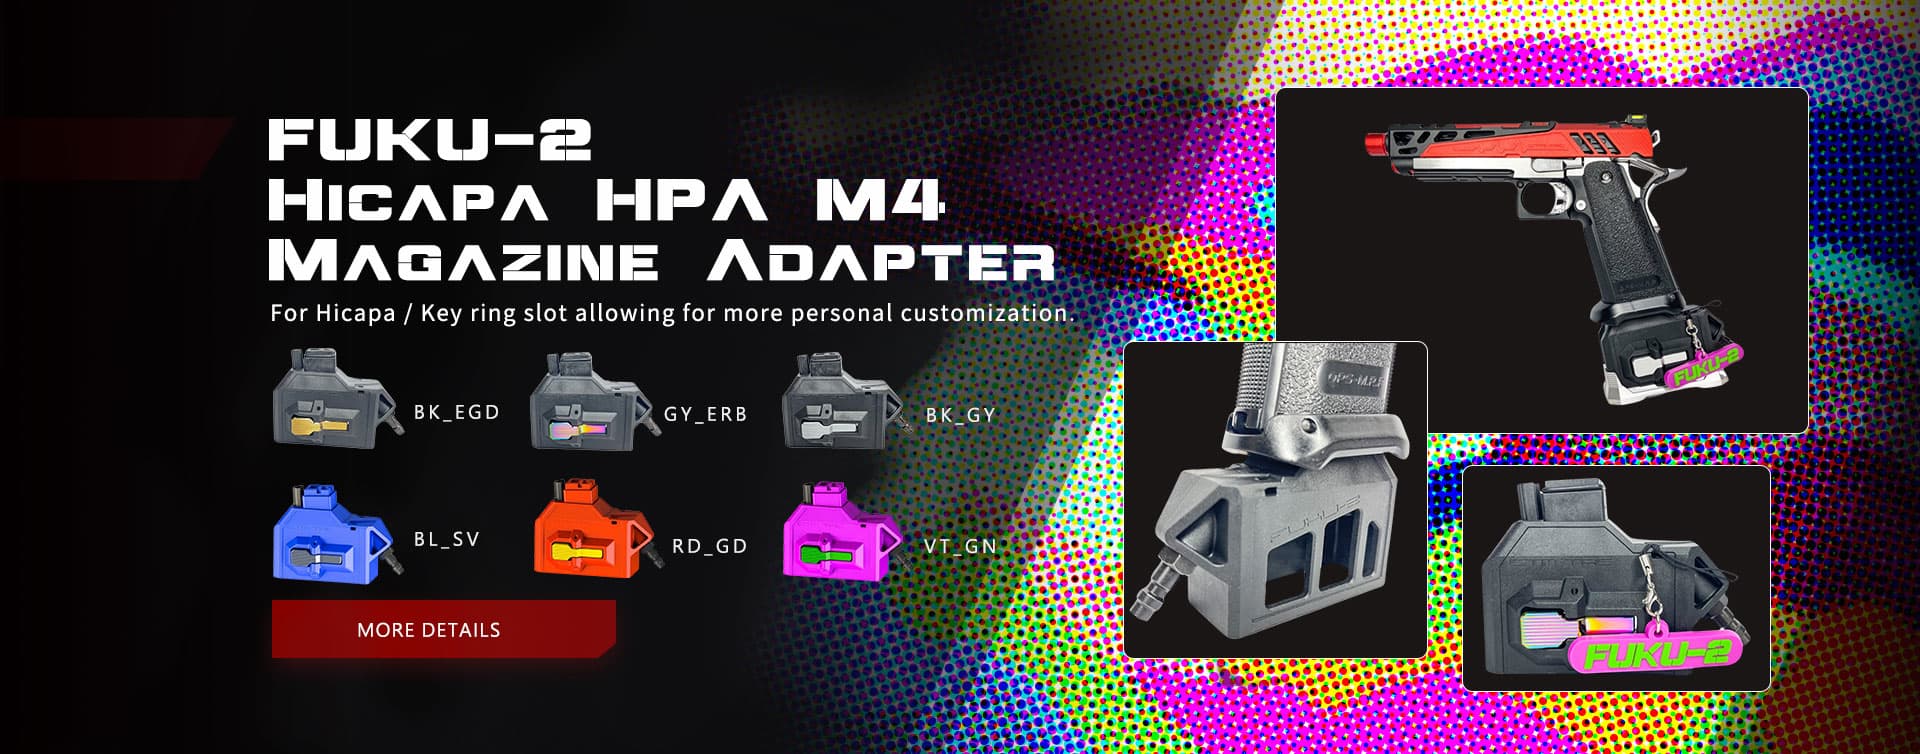 Hicapa HPA M4 Magazine Adapter